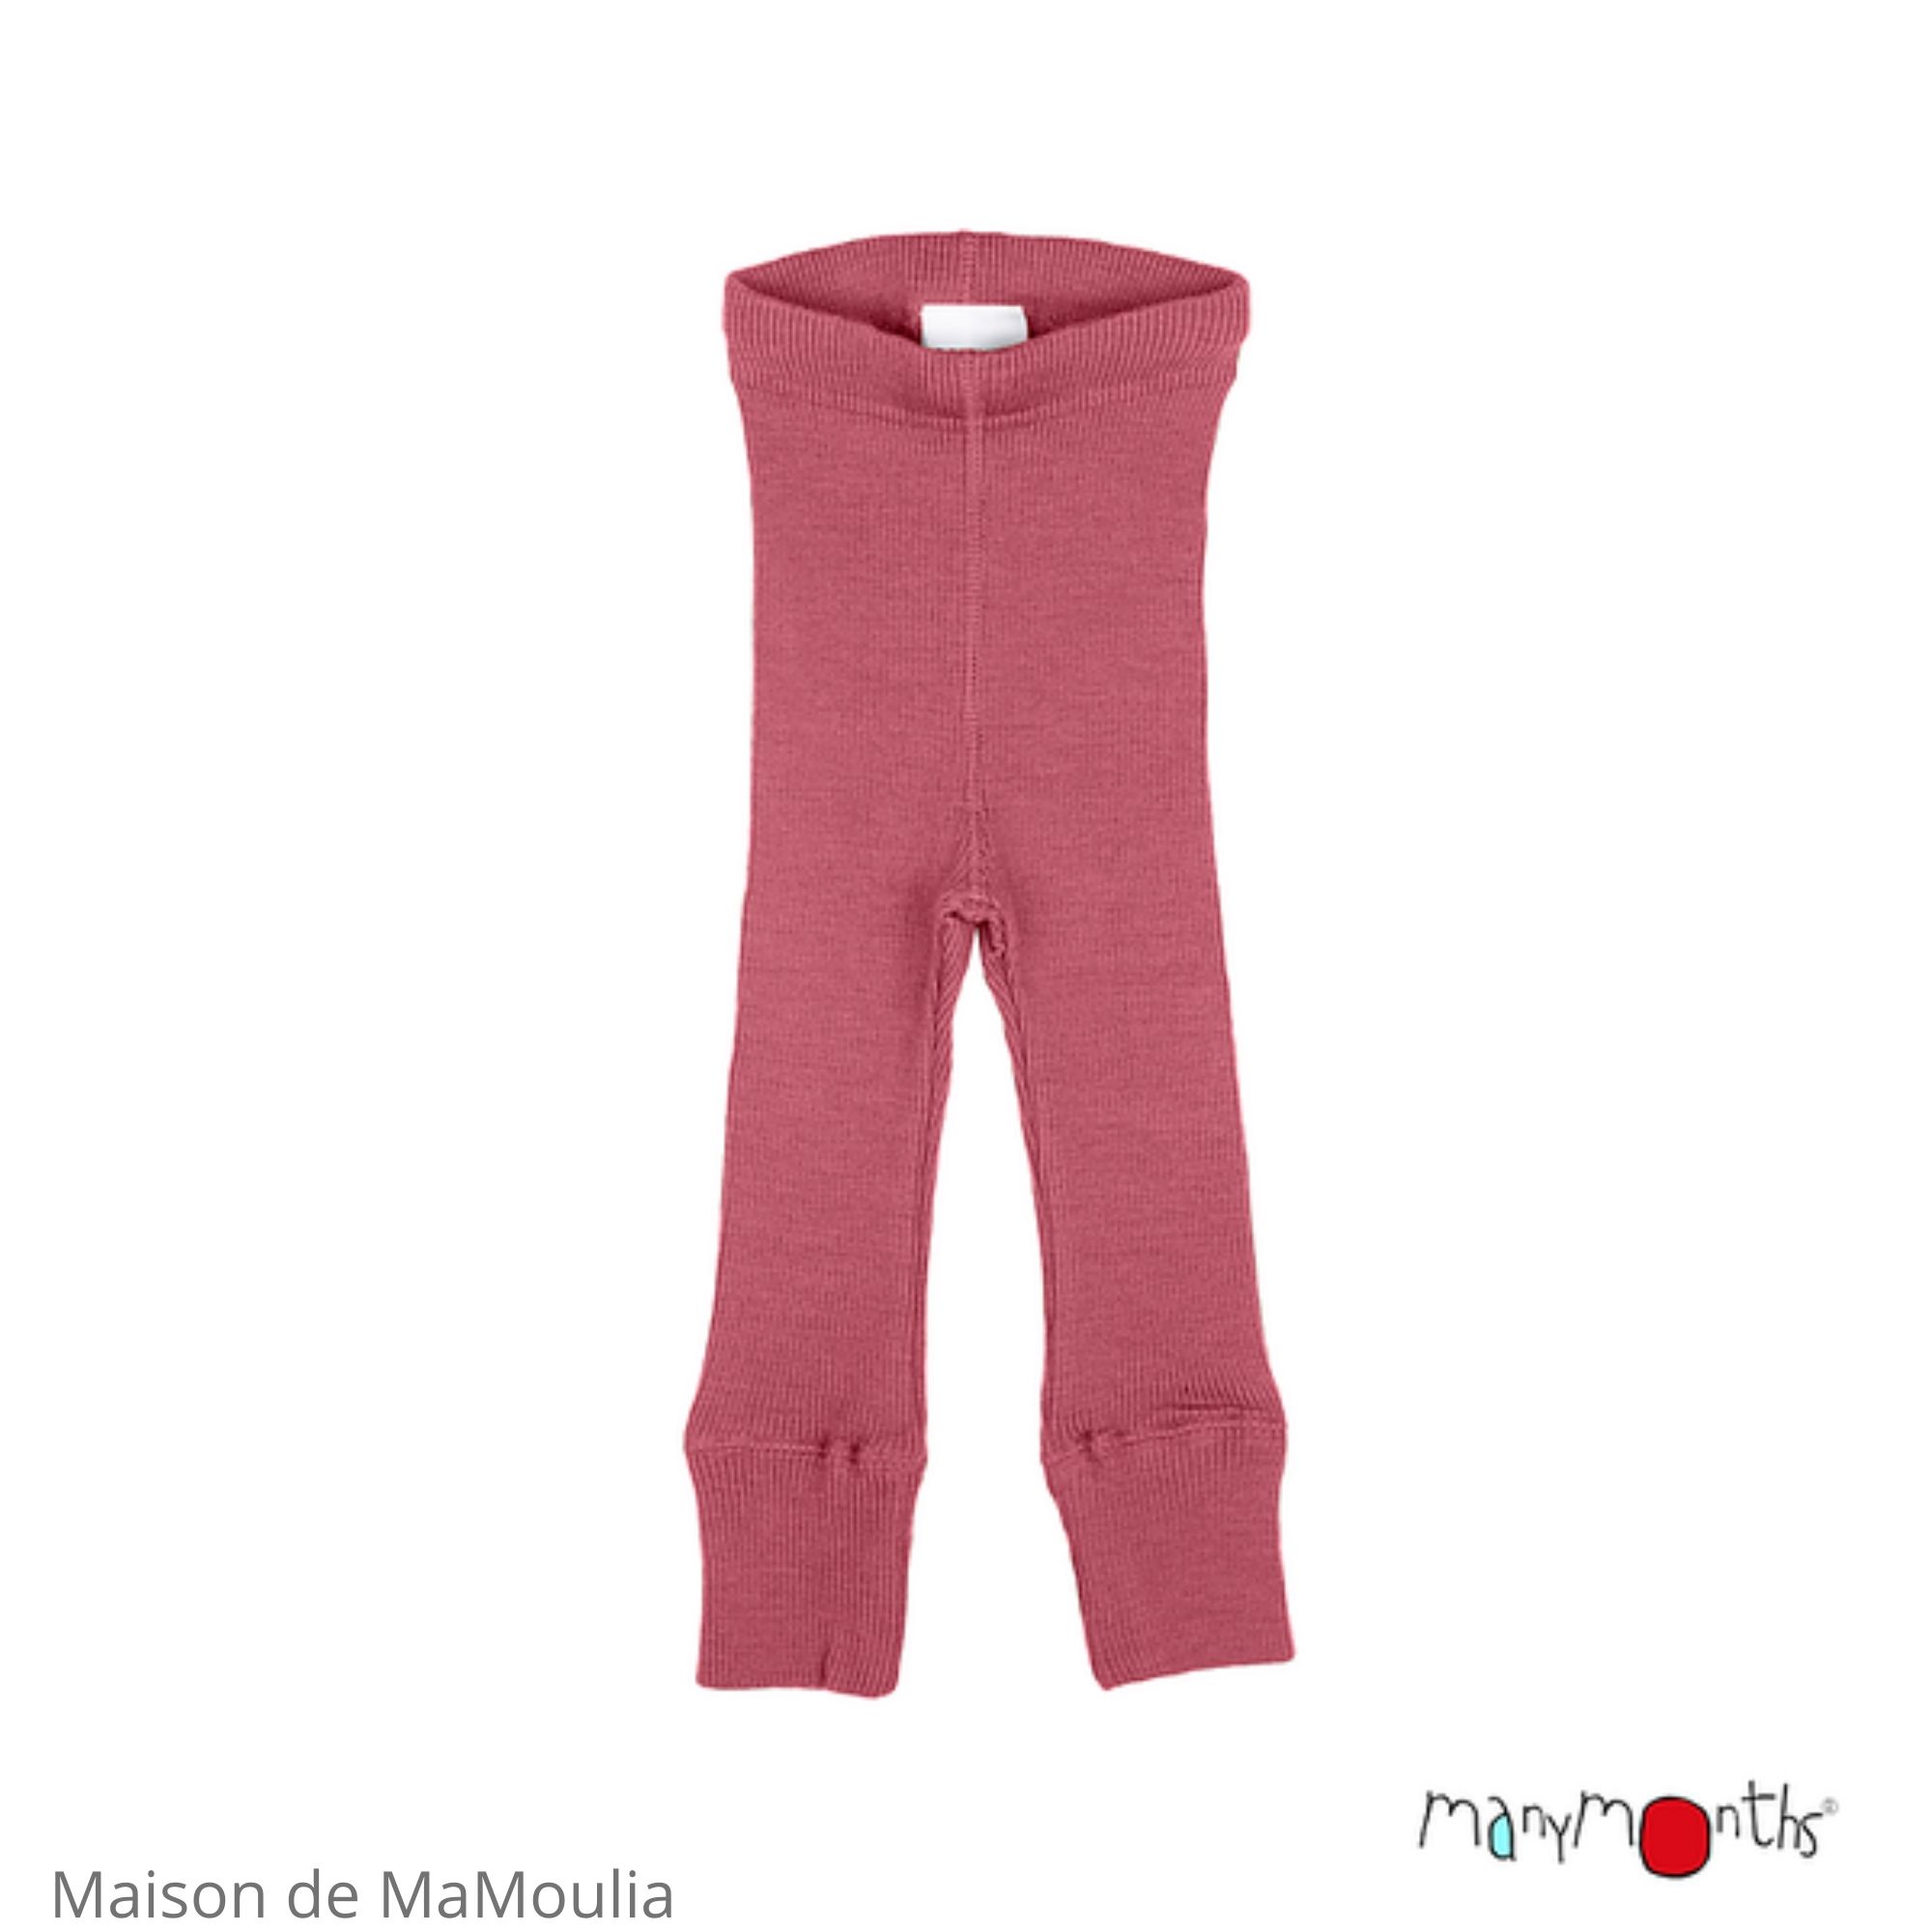 legging-bebe-enfant-evolutif-pure-laine-merinos-manymonths-maison-de-mamoulia-earth-red-rose